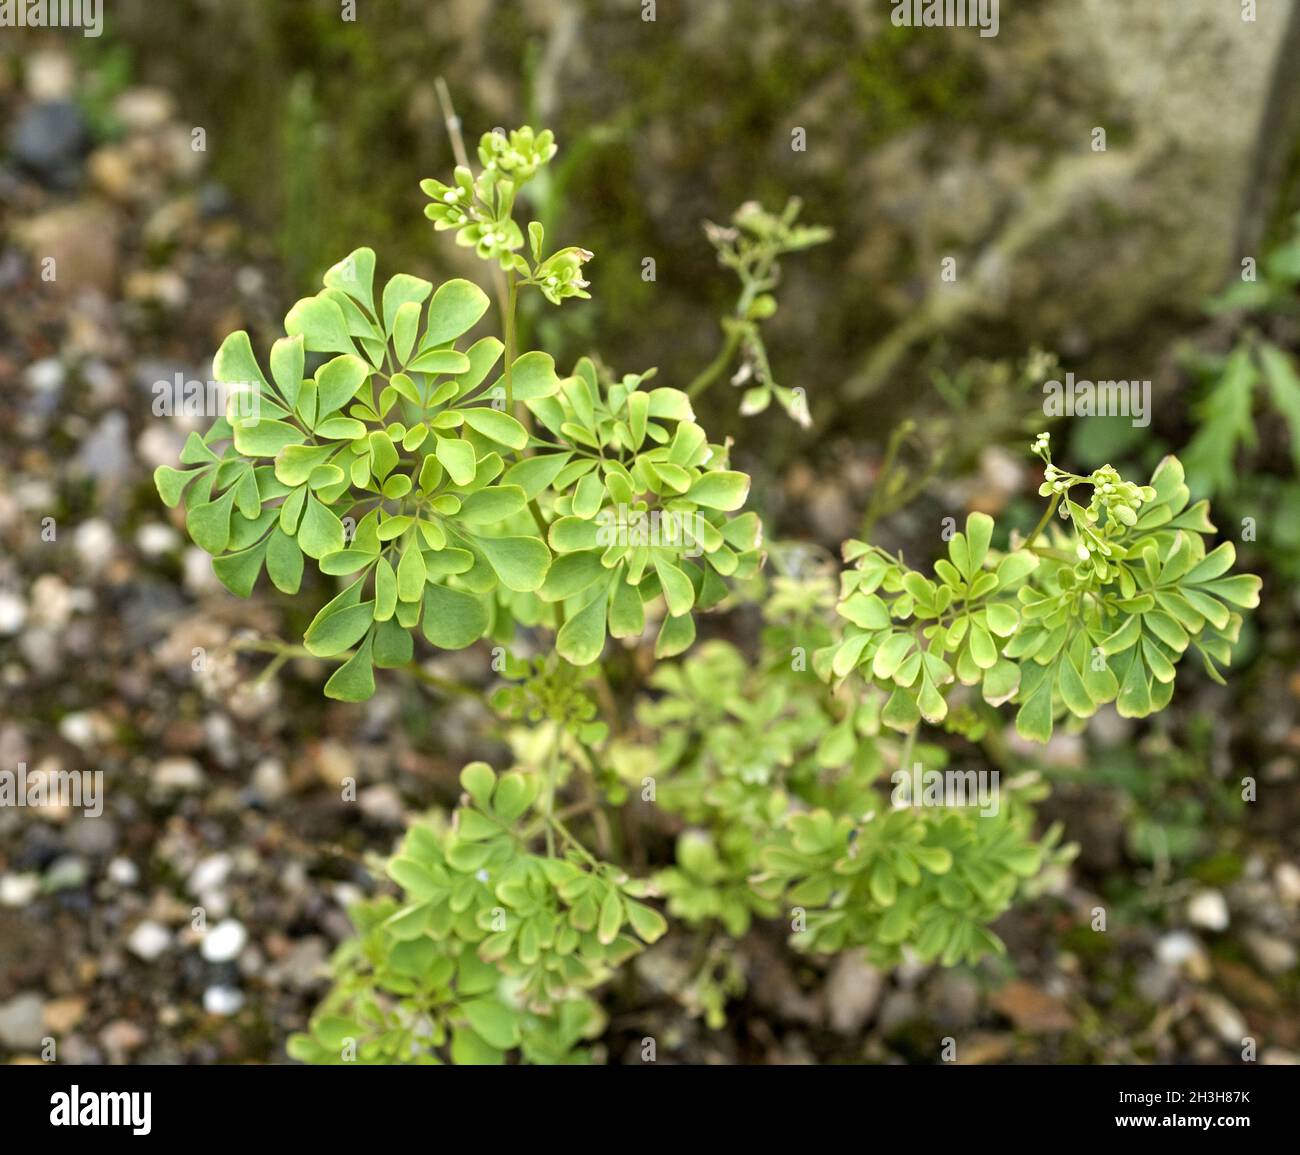 Boenninghausenia, albiflora, Stock Photo